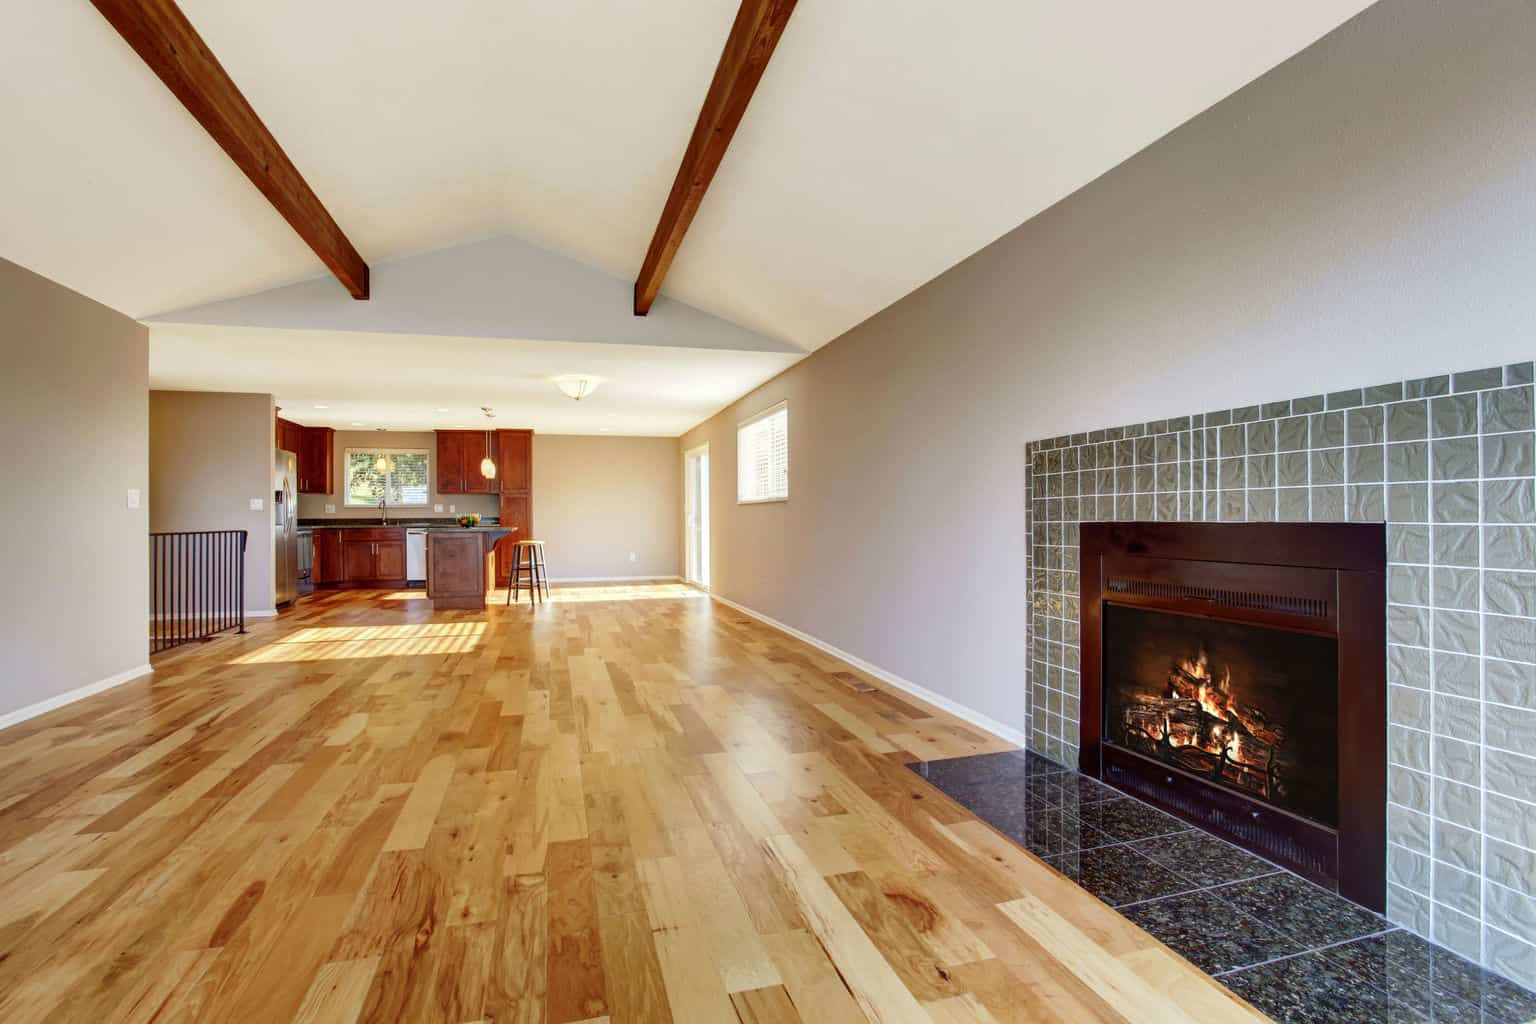 DIY Hardwood Floor Refinish
 Refinishing Hardwood Pine Flooring A How To DIY Guide